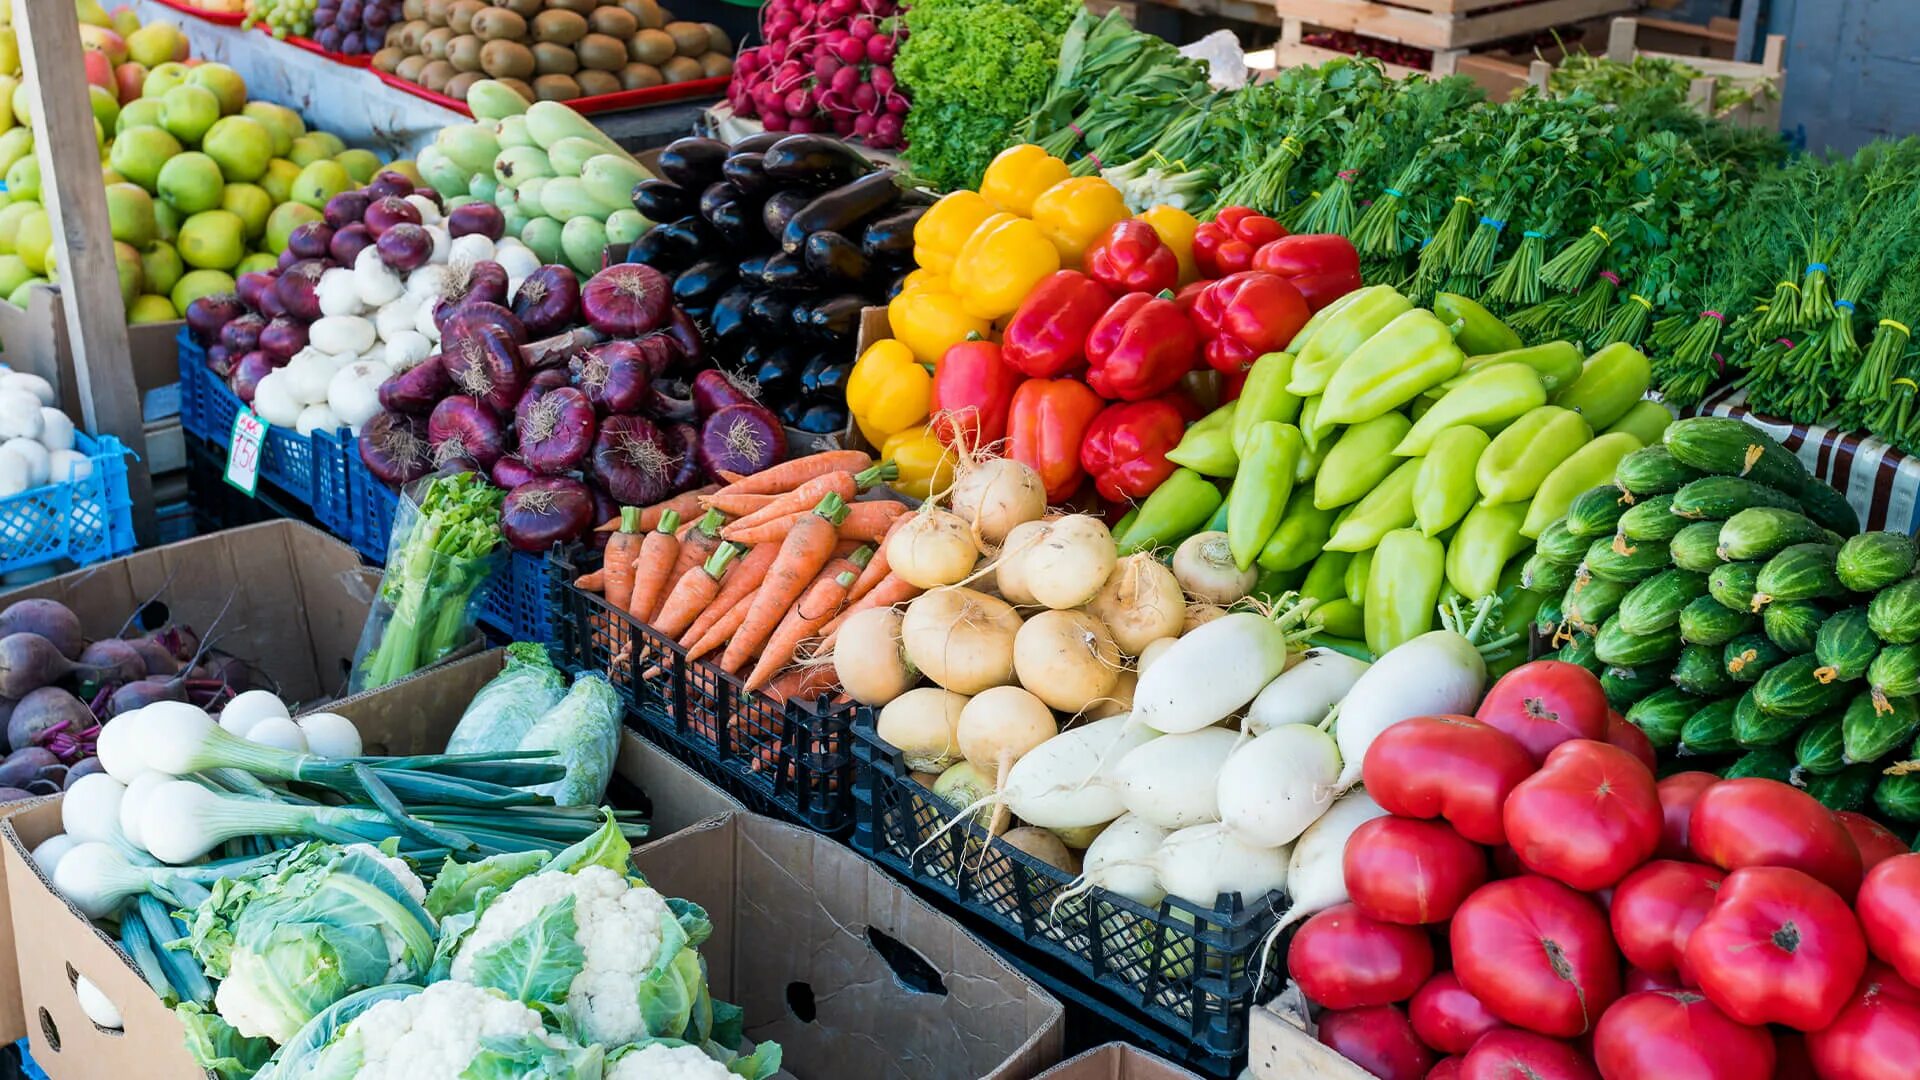 Овощи на рынке. Овощи и фрукты на рынке. Фруктовый рынок. Овощи и фрукты на базаре.